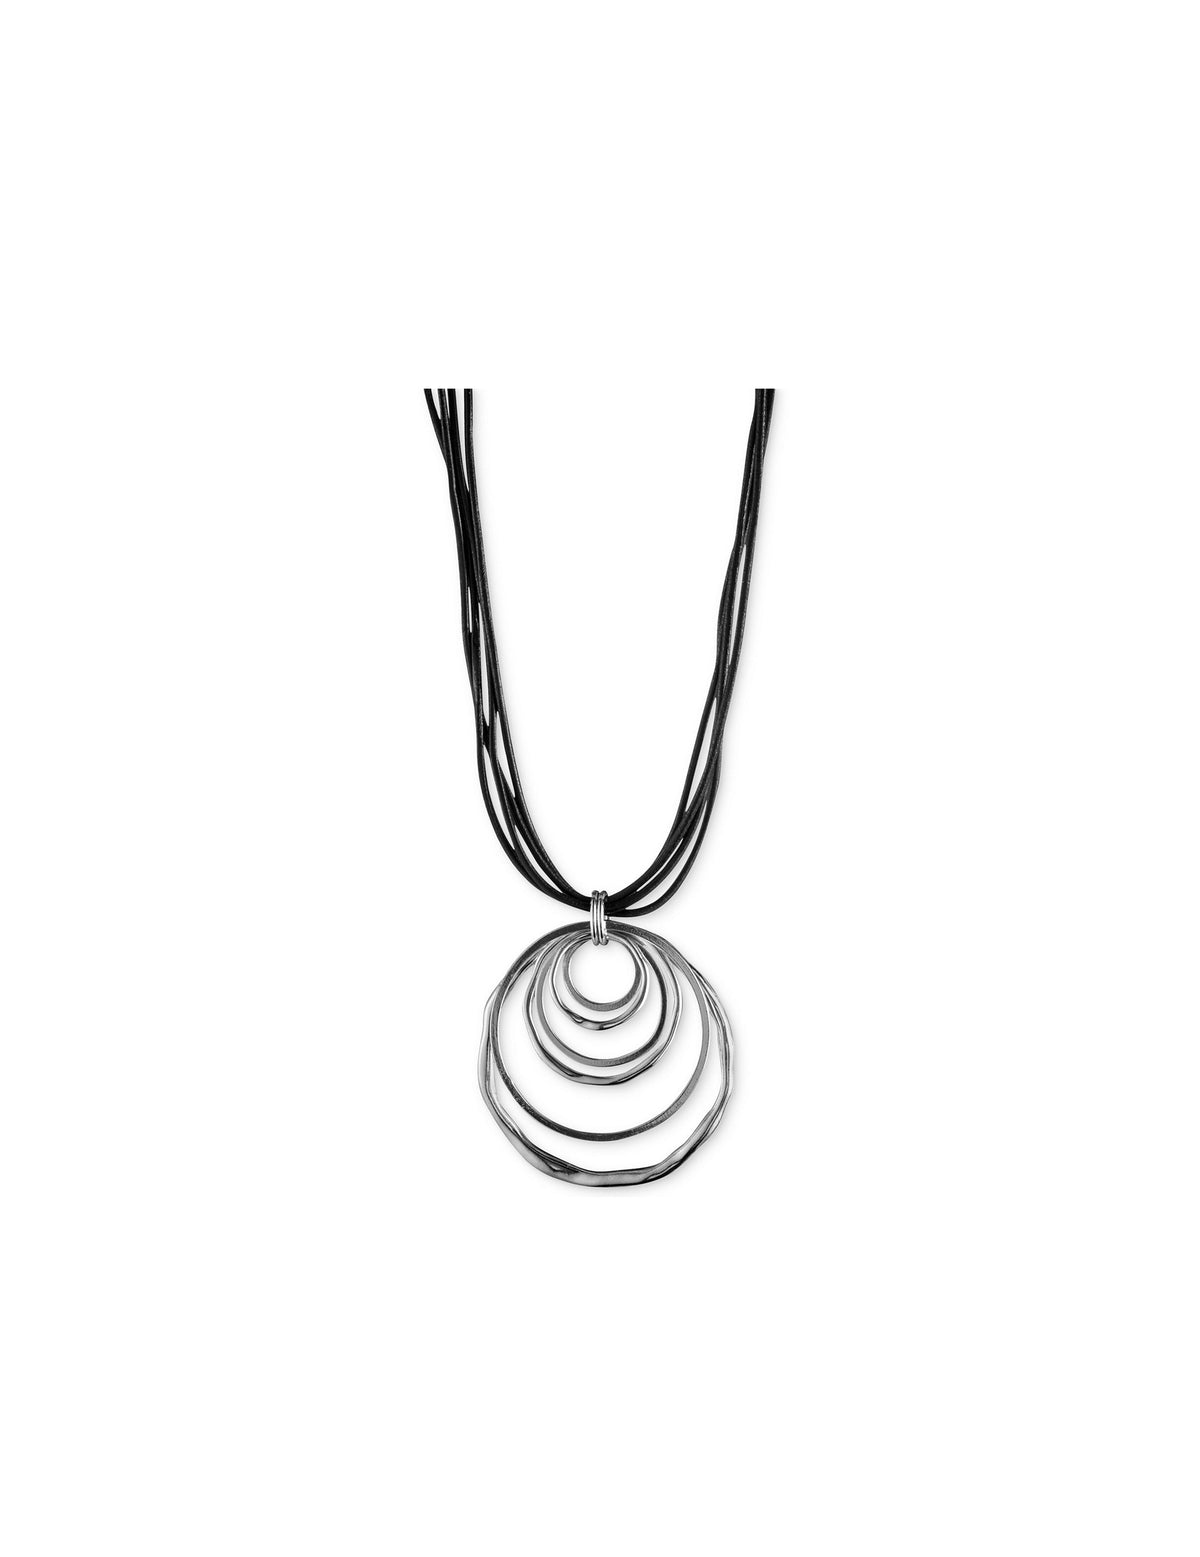 Anne Klein Silver-Tone&amp;Black Multi Inter Hoop Large Pendant Necklace Silver/Black